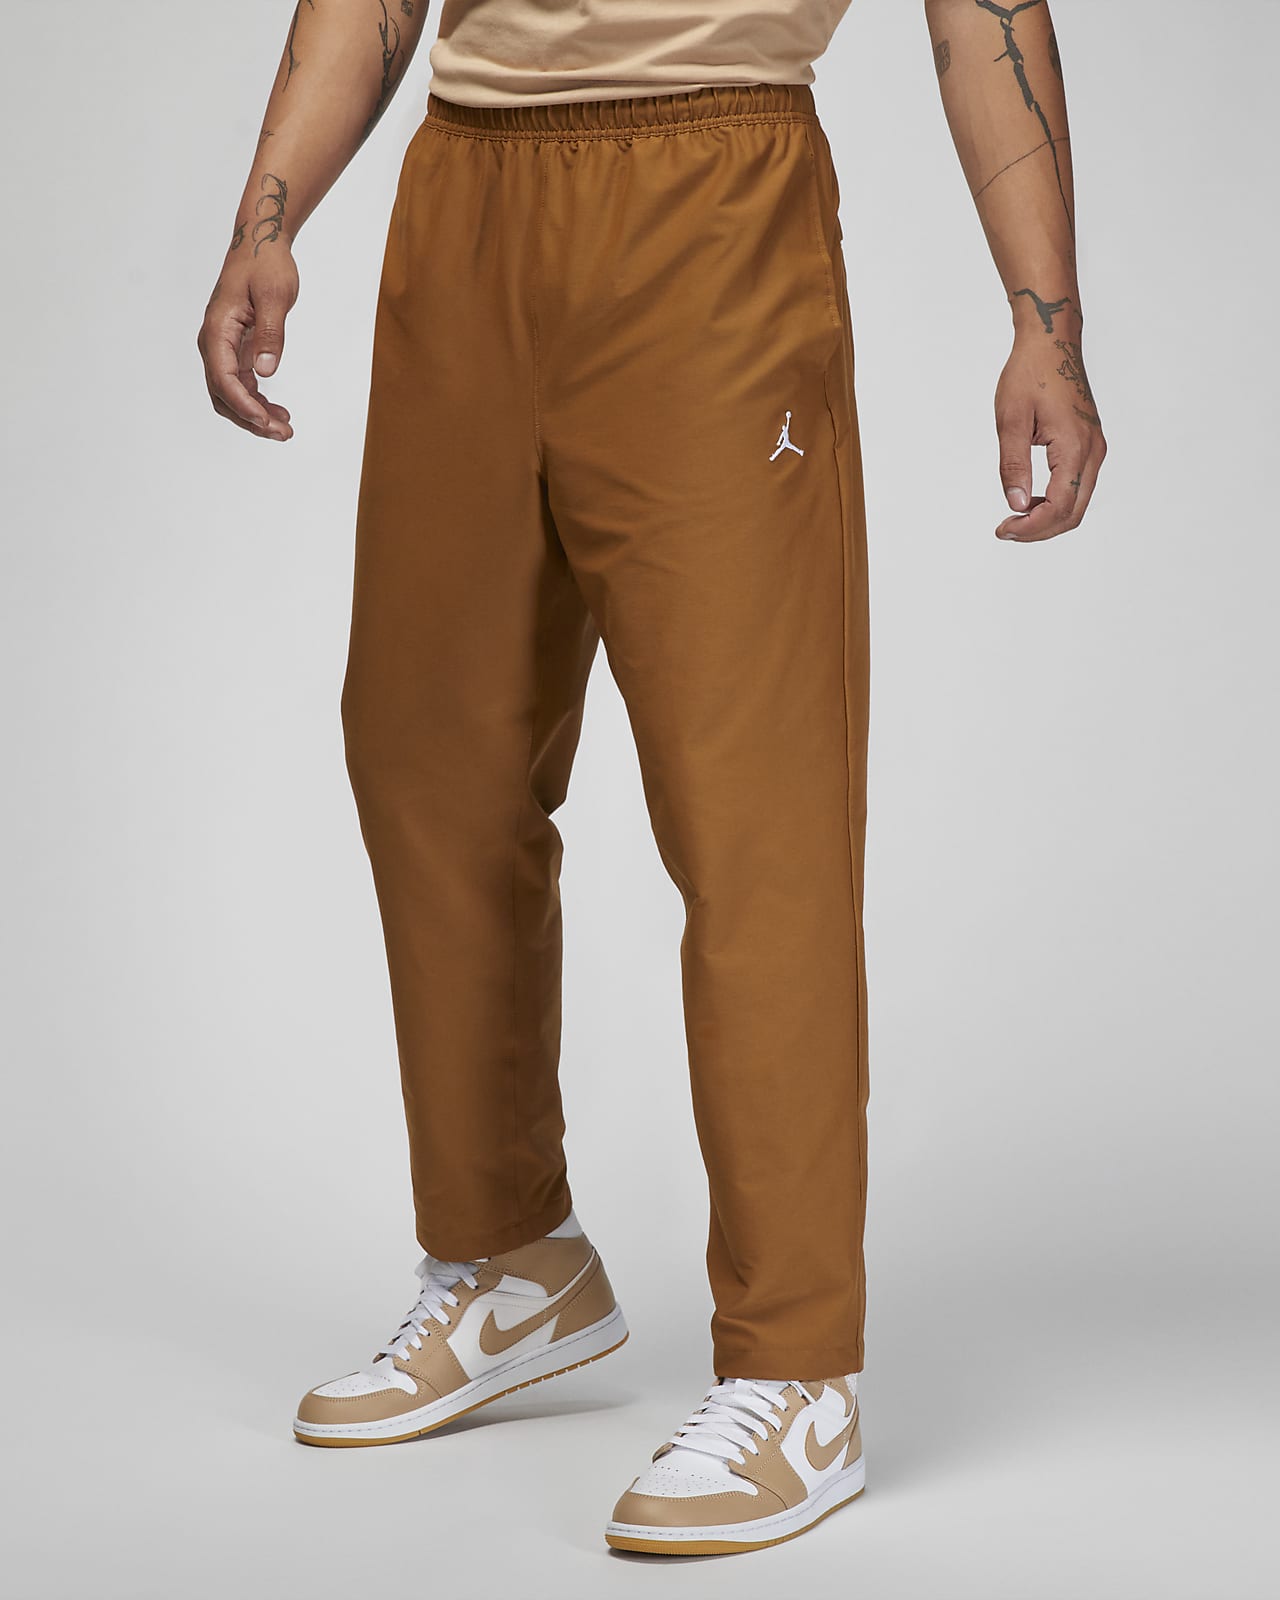 Jordan Essentials Men's Cropped Pants.